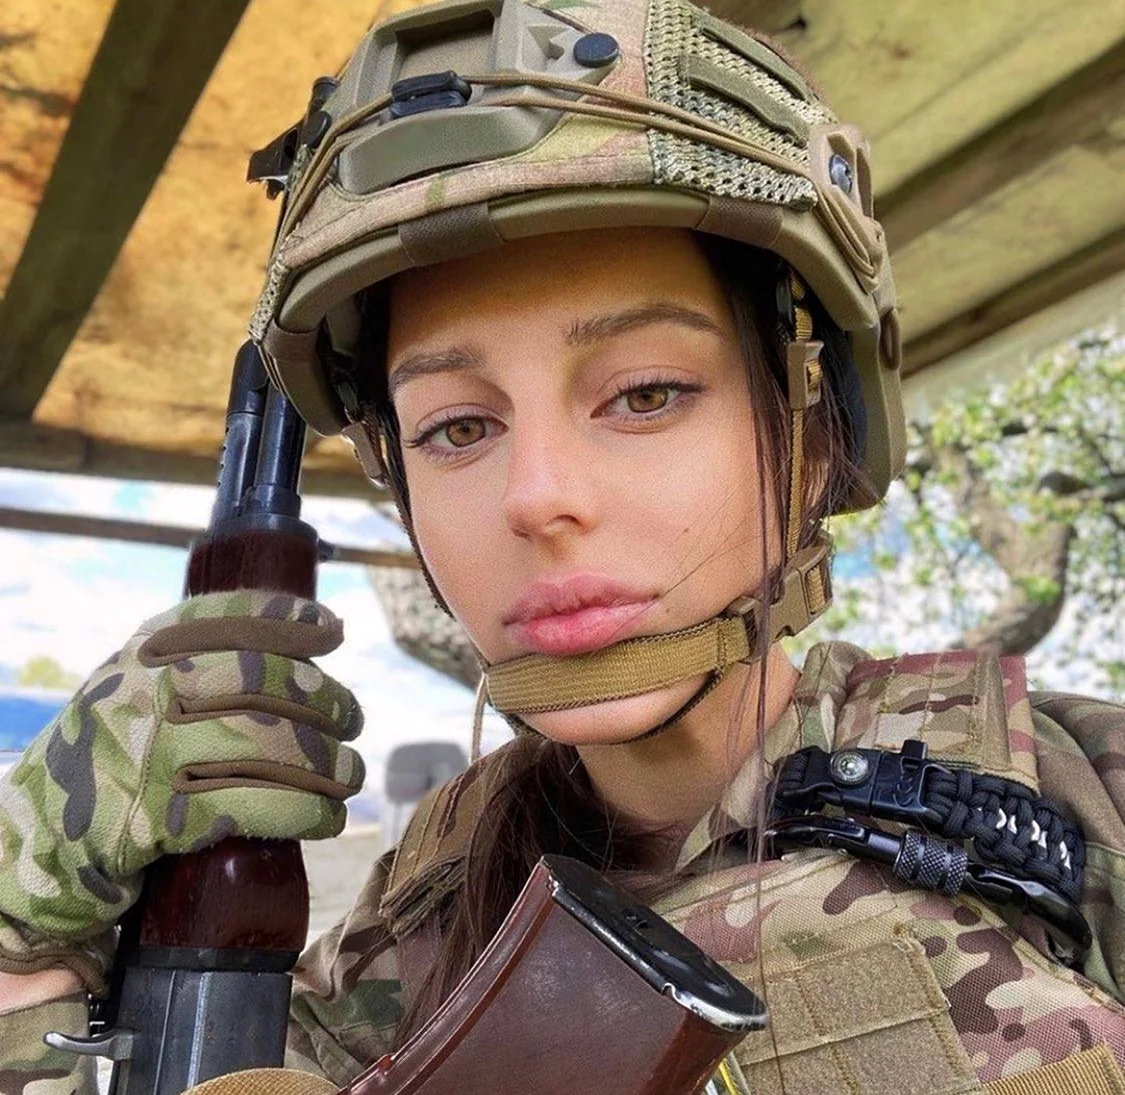 Александра Самсонова снайпер Украина. Красивая девушка